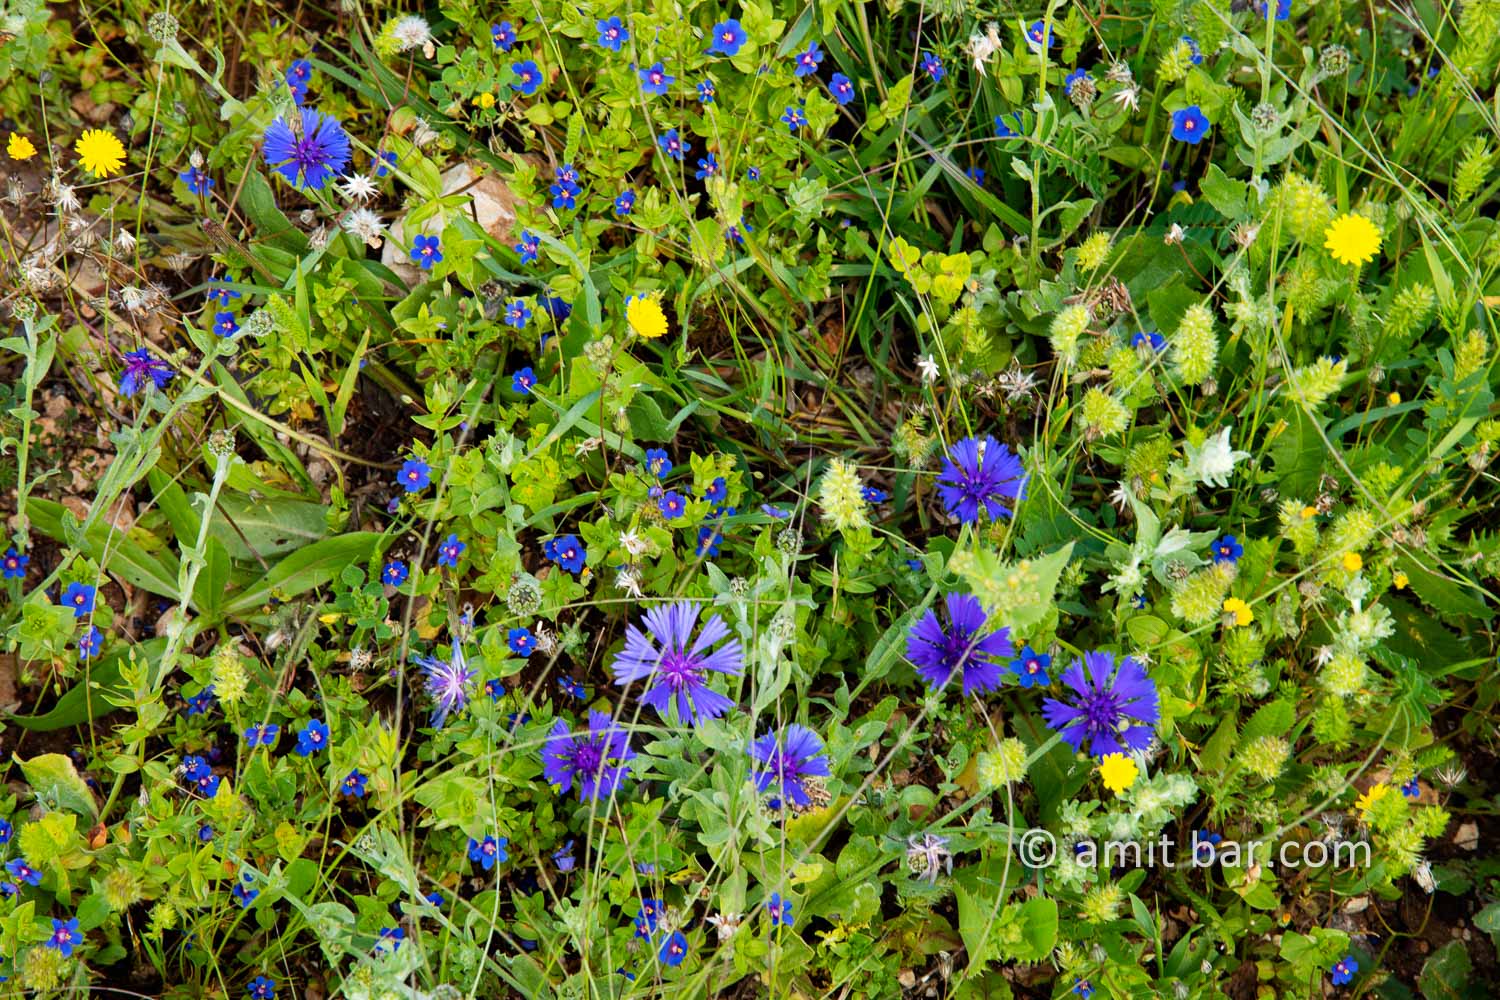 Carmel wild flowers VII: wild flowers on mountain Carmel, Israel in the spring time